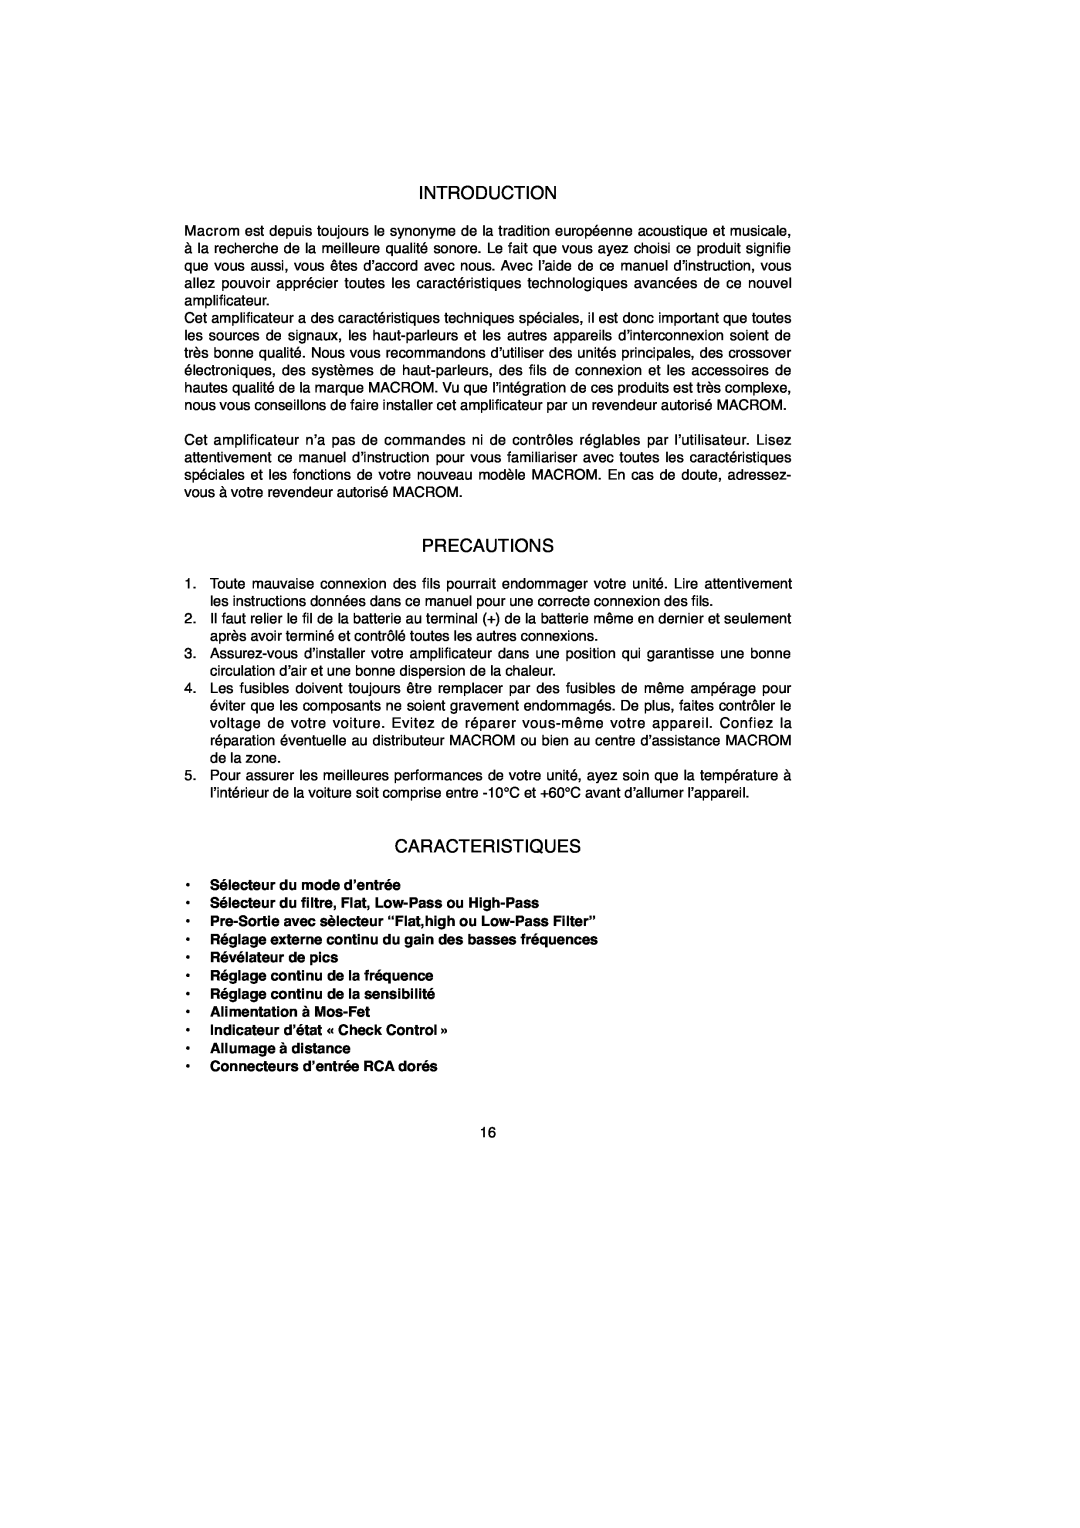 Macrom 2.100x owner manual Caracteristiques, Introduction, Precautions 